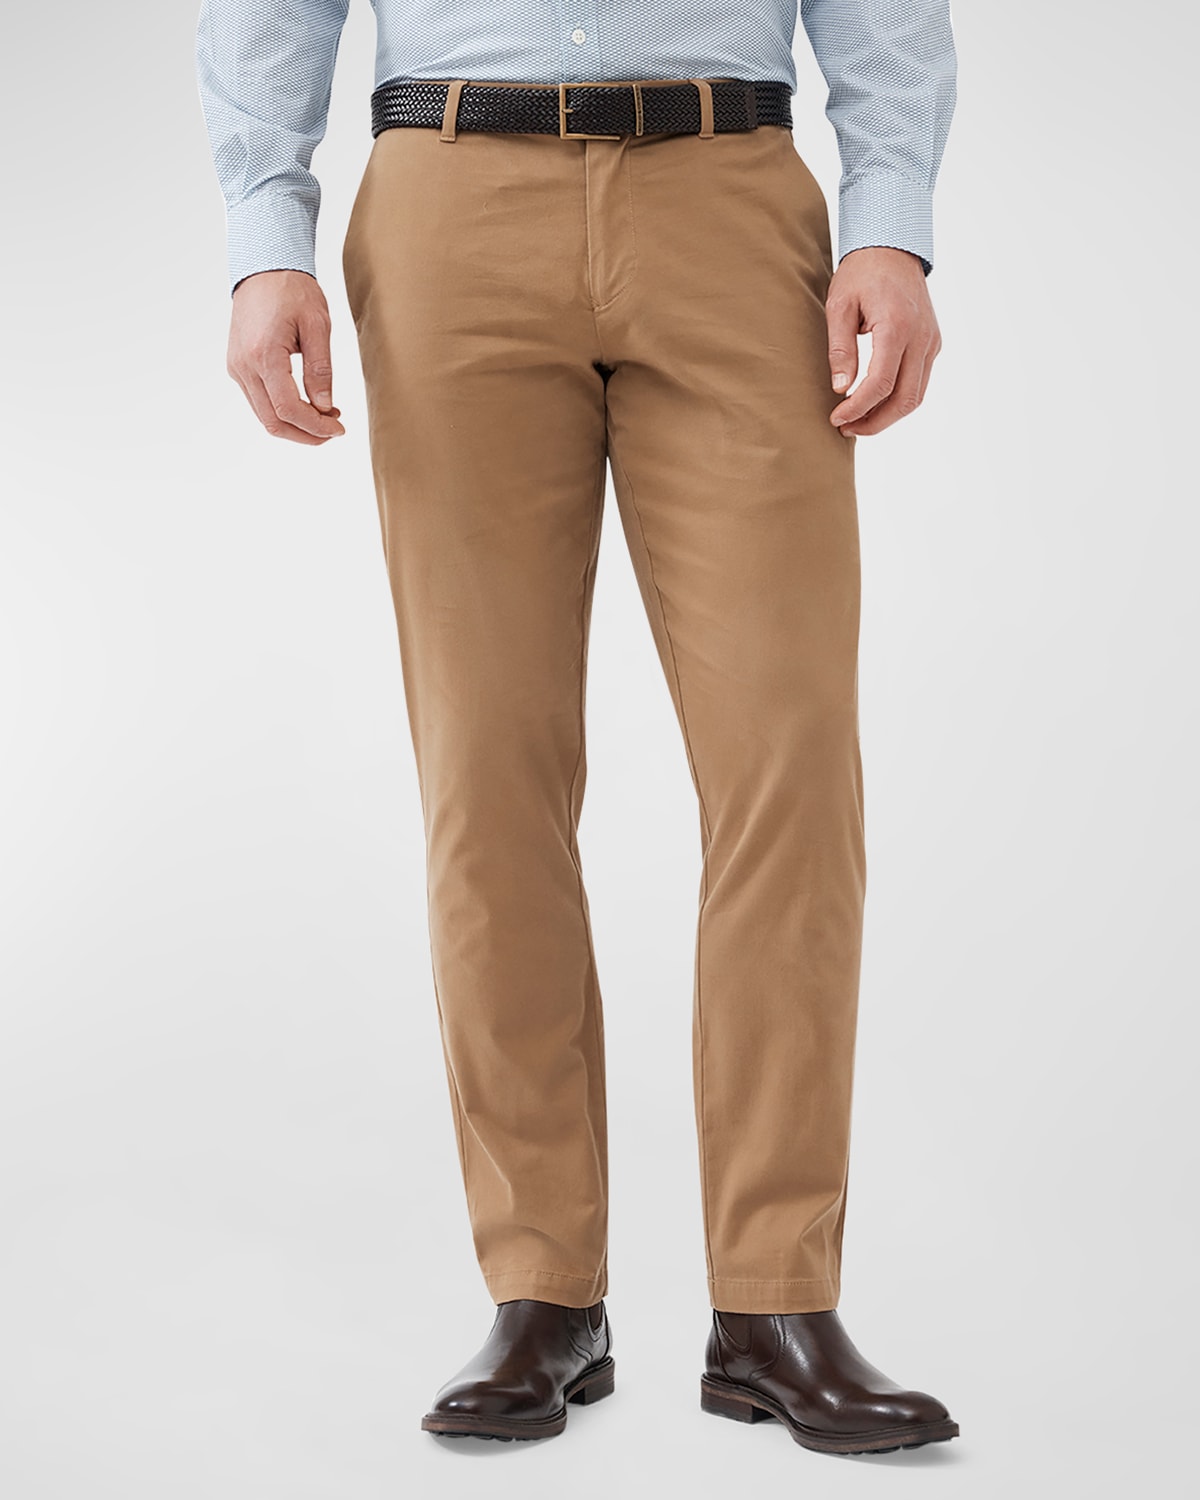 Men's Edgars Road Straight-Fit 5-Pocket Pants